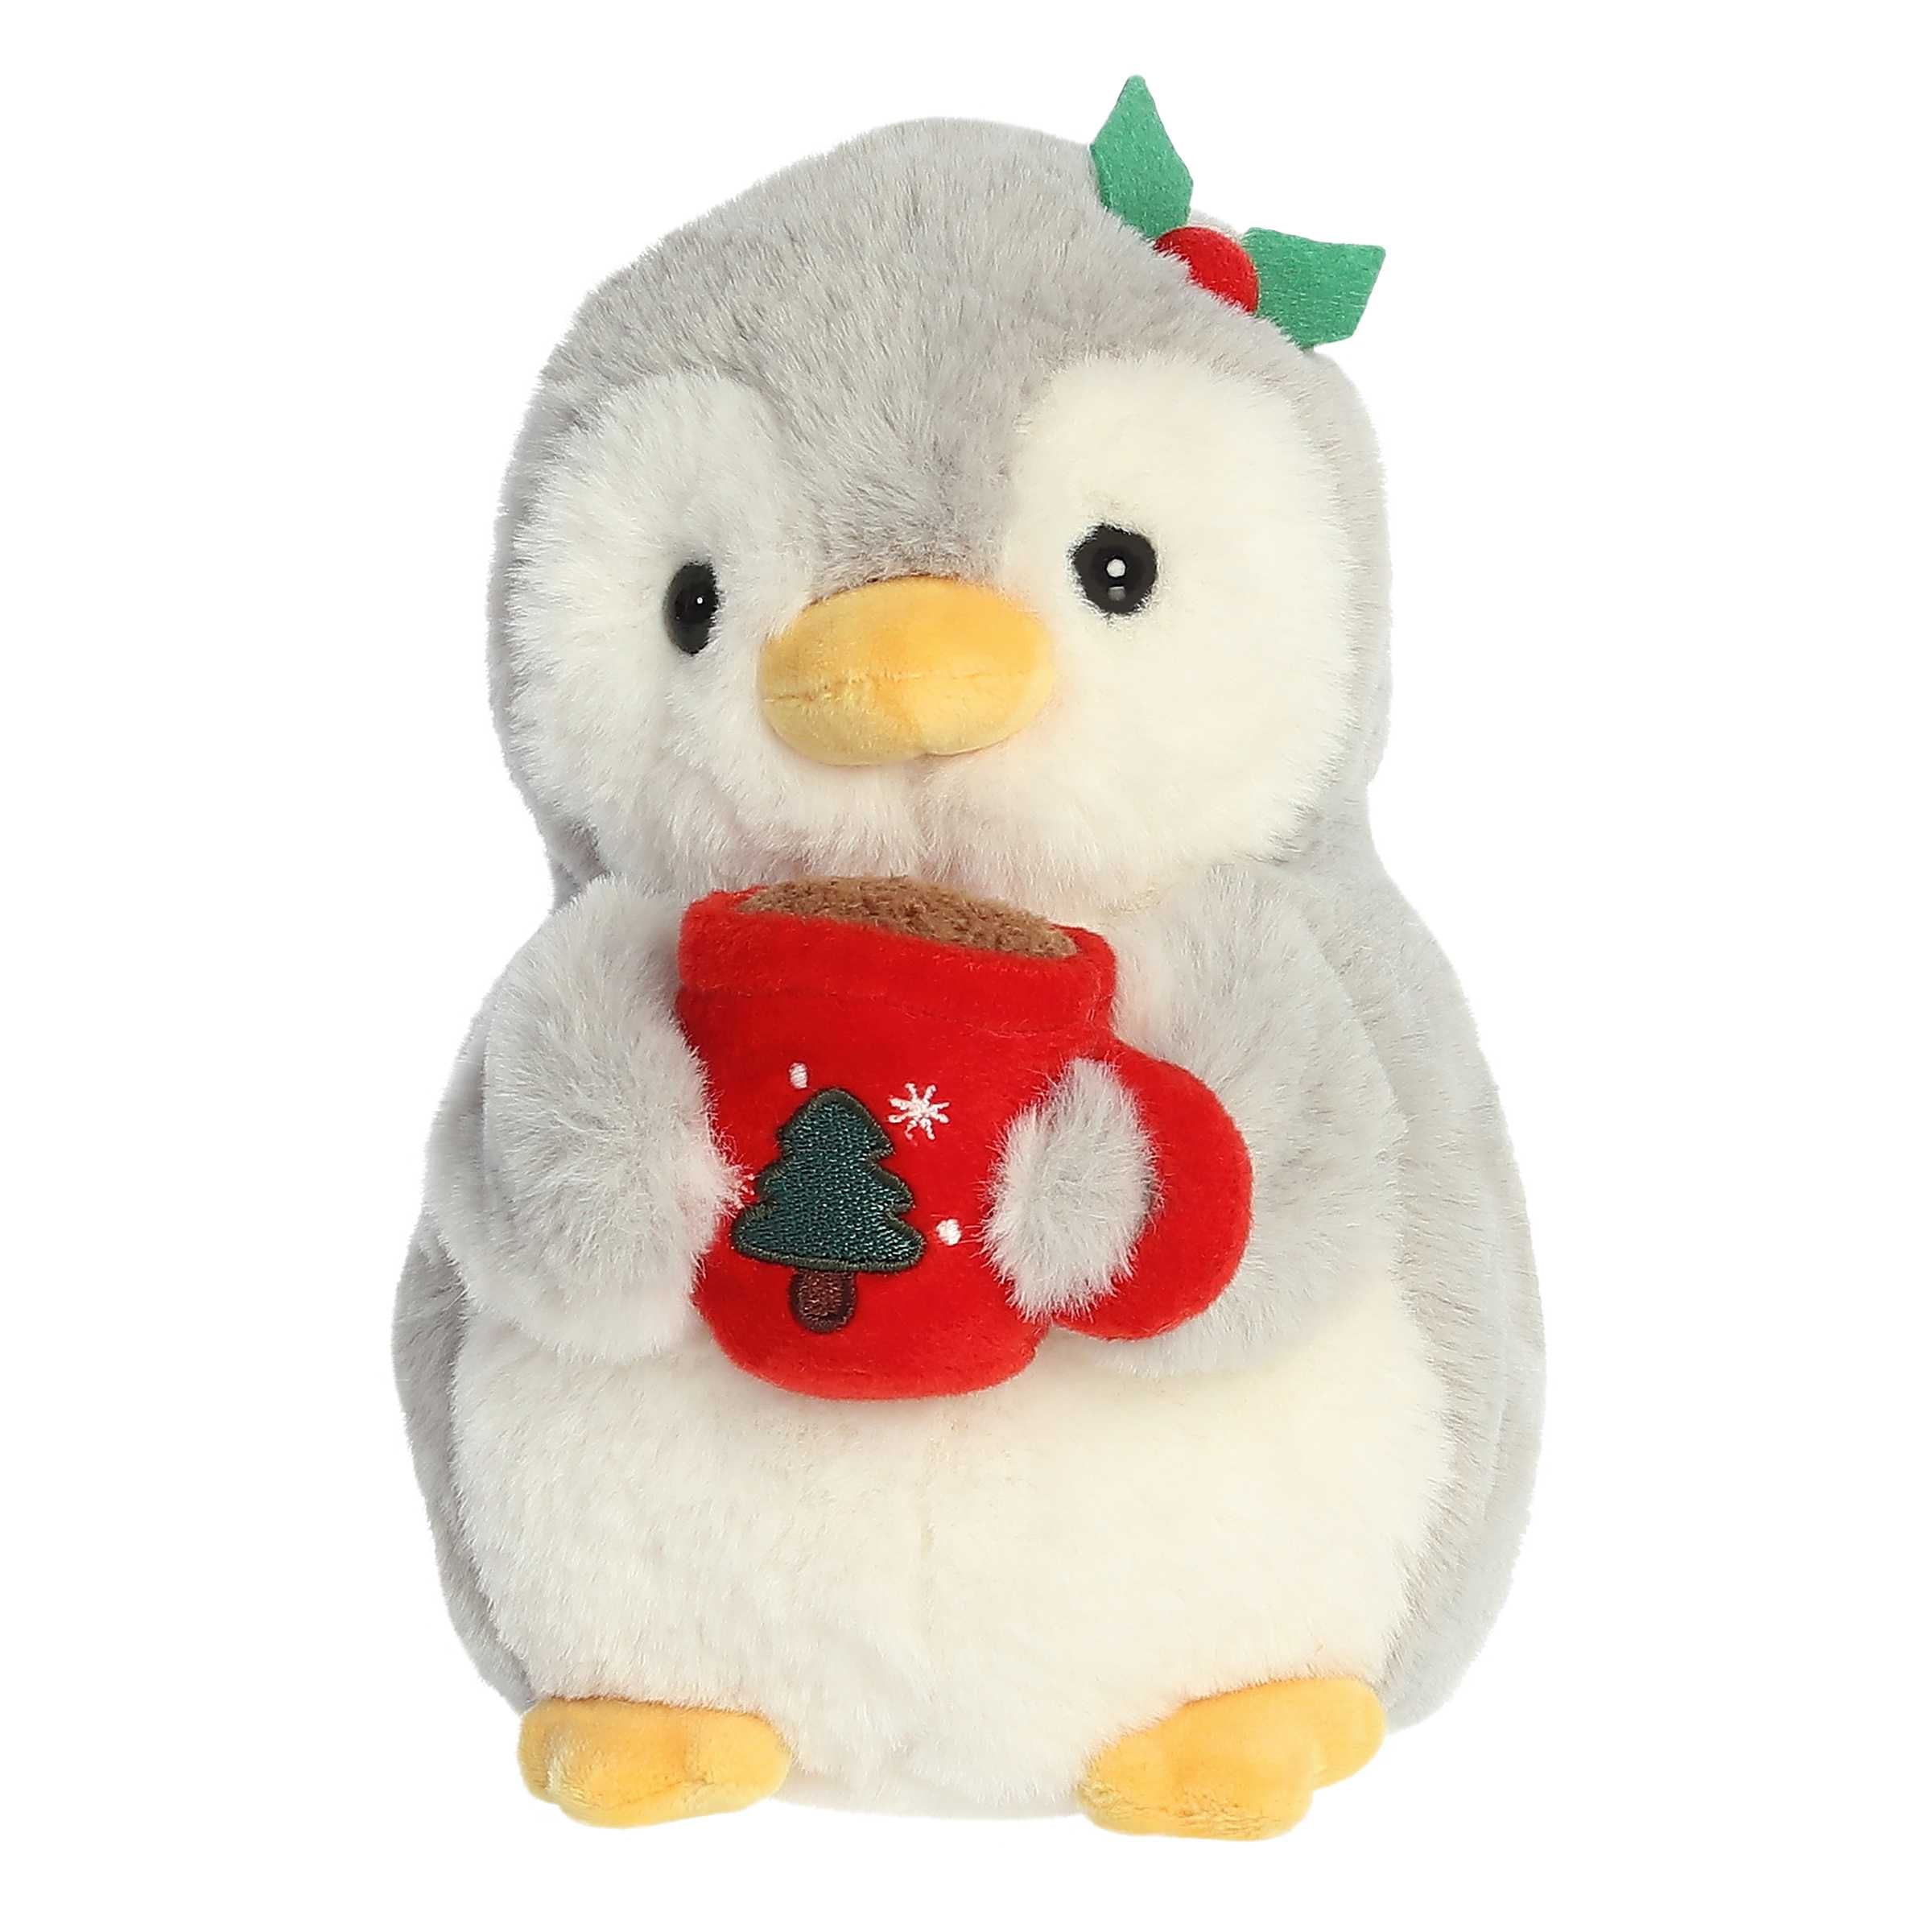 Aurora - Small Gray Pompom Penguin - 8 Holiday Donut - Festive Stuffed Animal